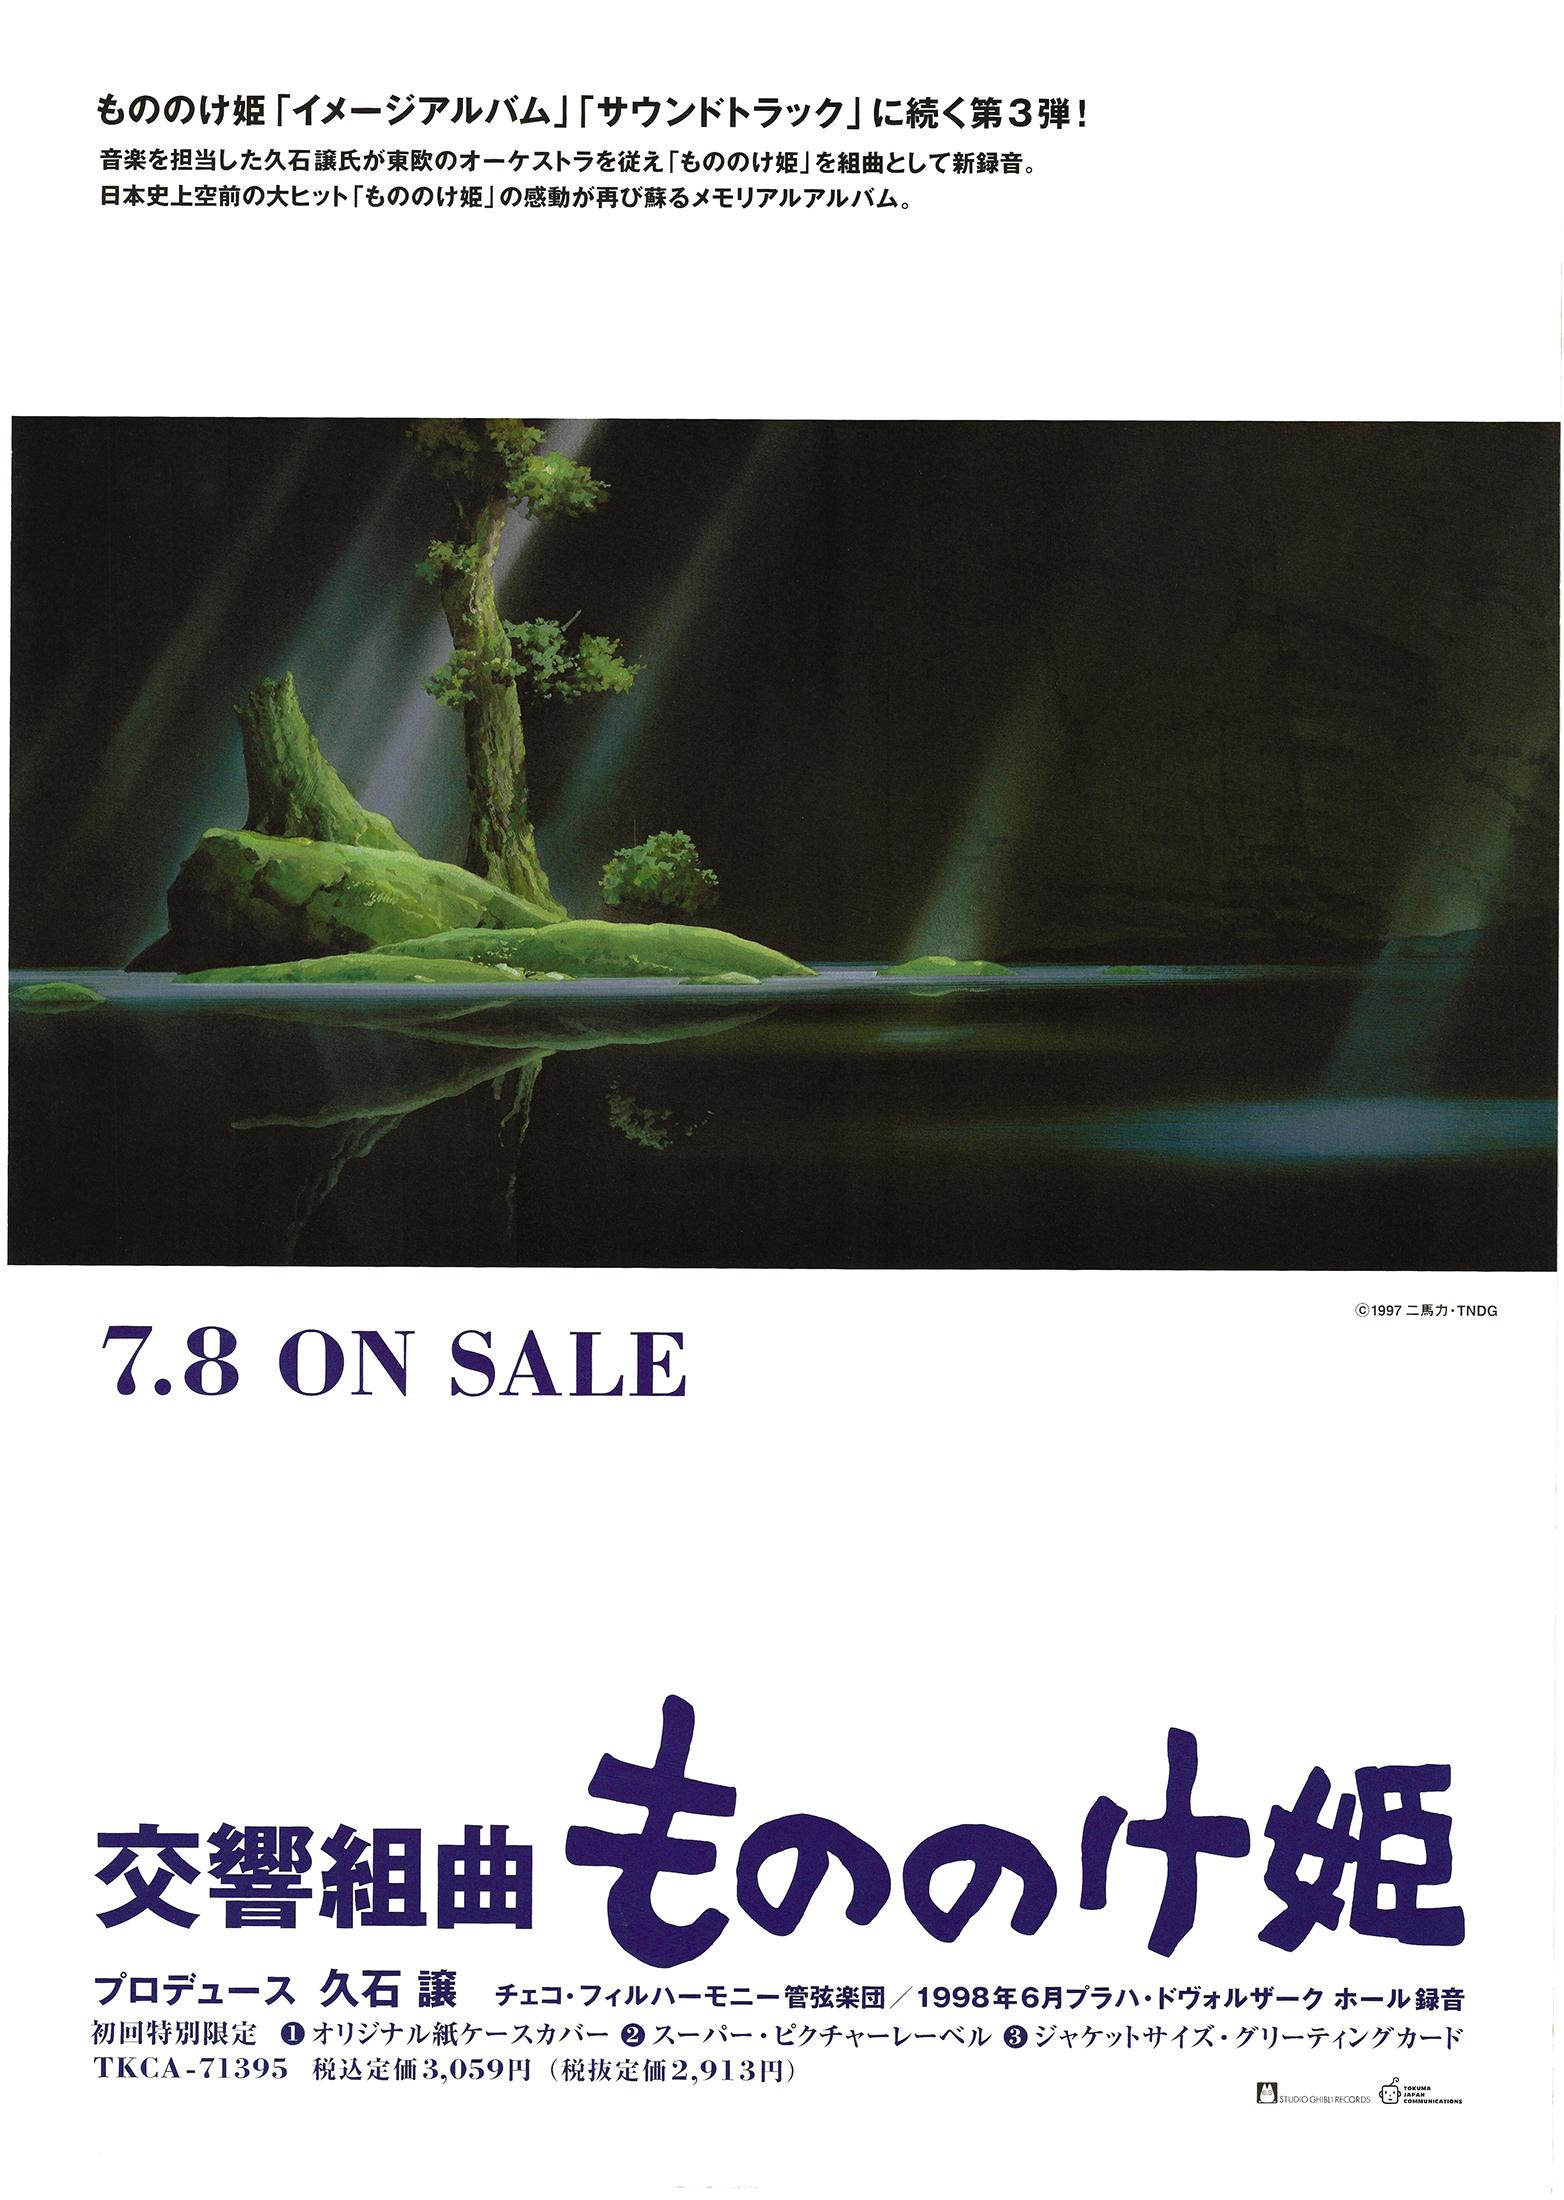 Princess Mononoke Original Vintage Soundtrack Poster, Hisaishi, Studio Ghibli - Print by Unknown